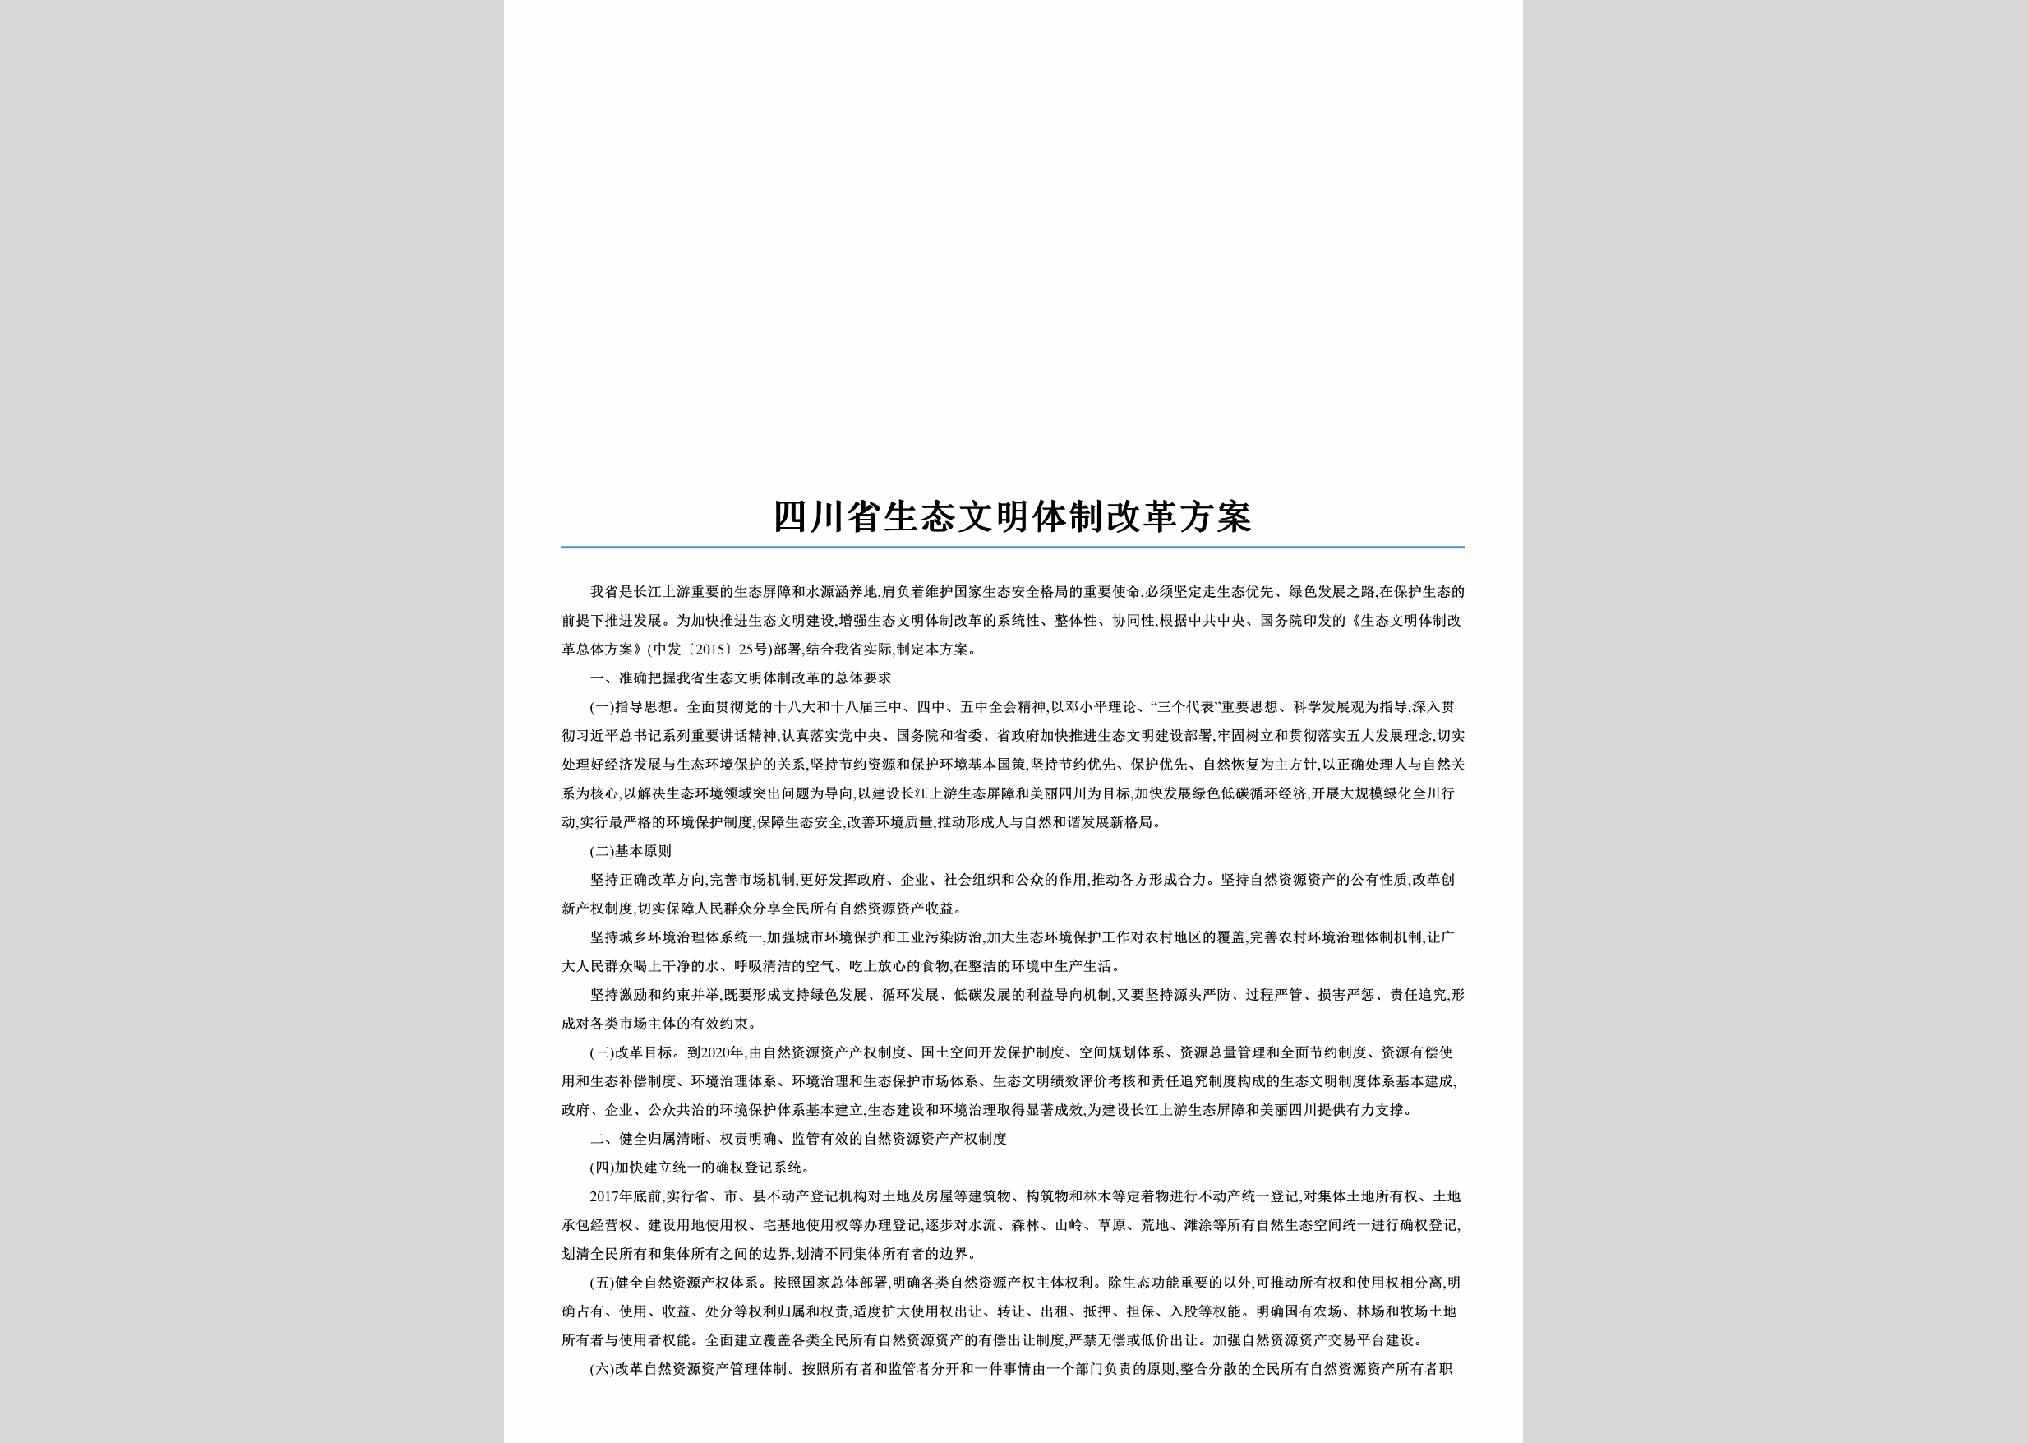 SC-STWMGGFA-2016：四川省生态文明体制改革方案